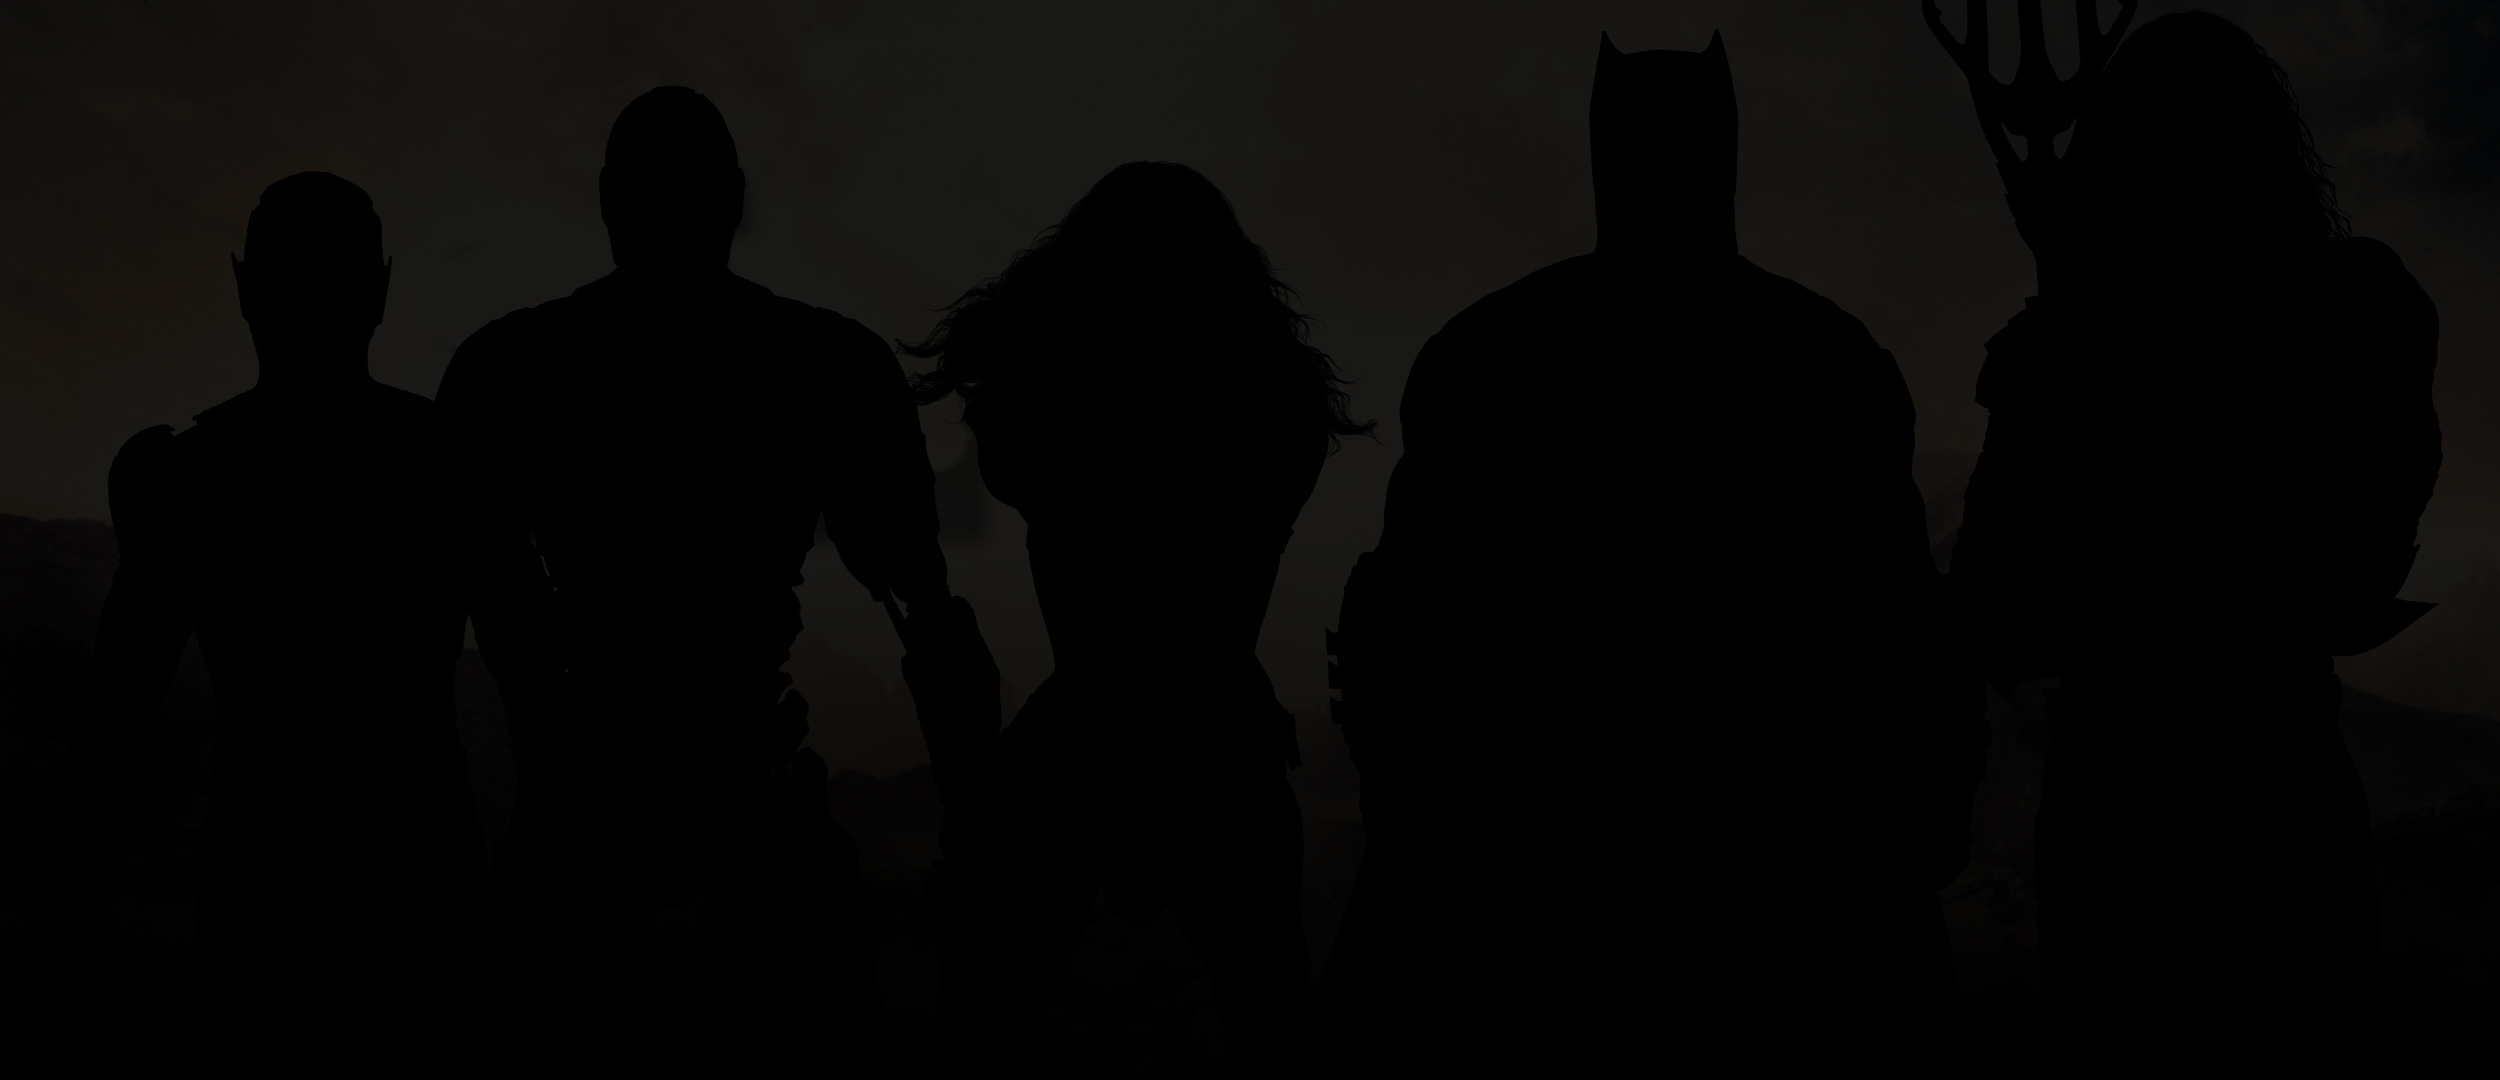 Justice League Dark Wallpapers